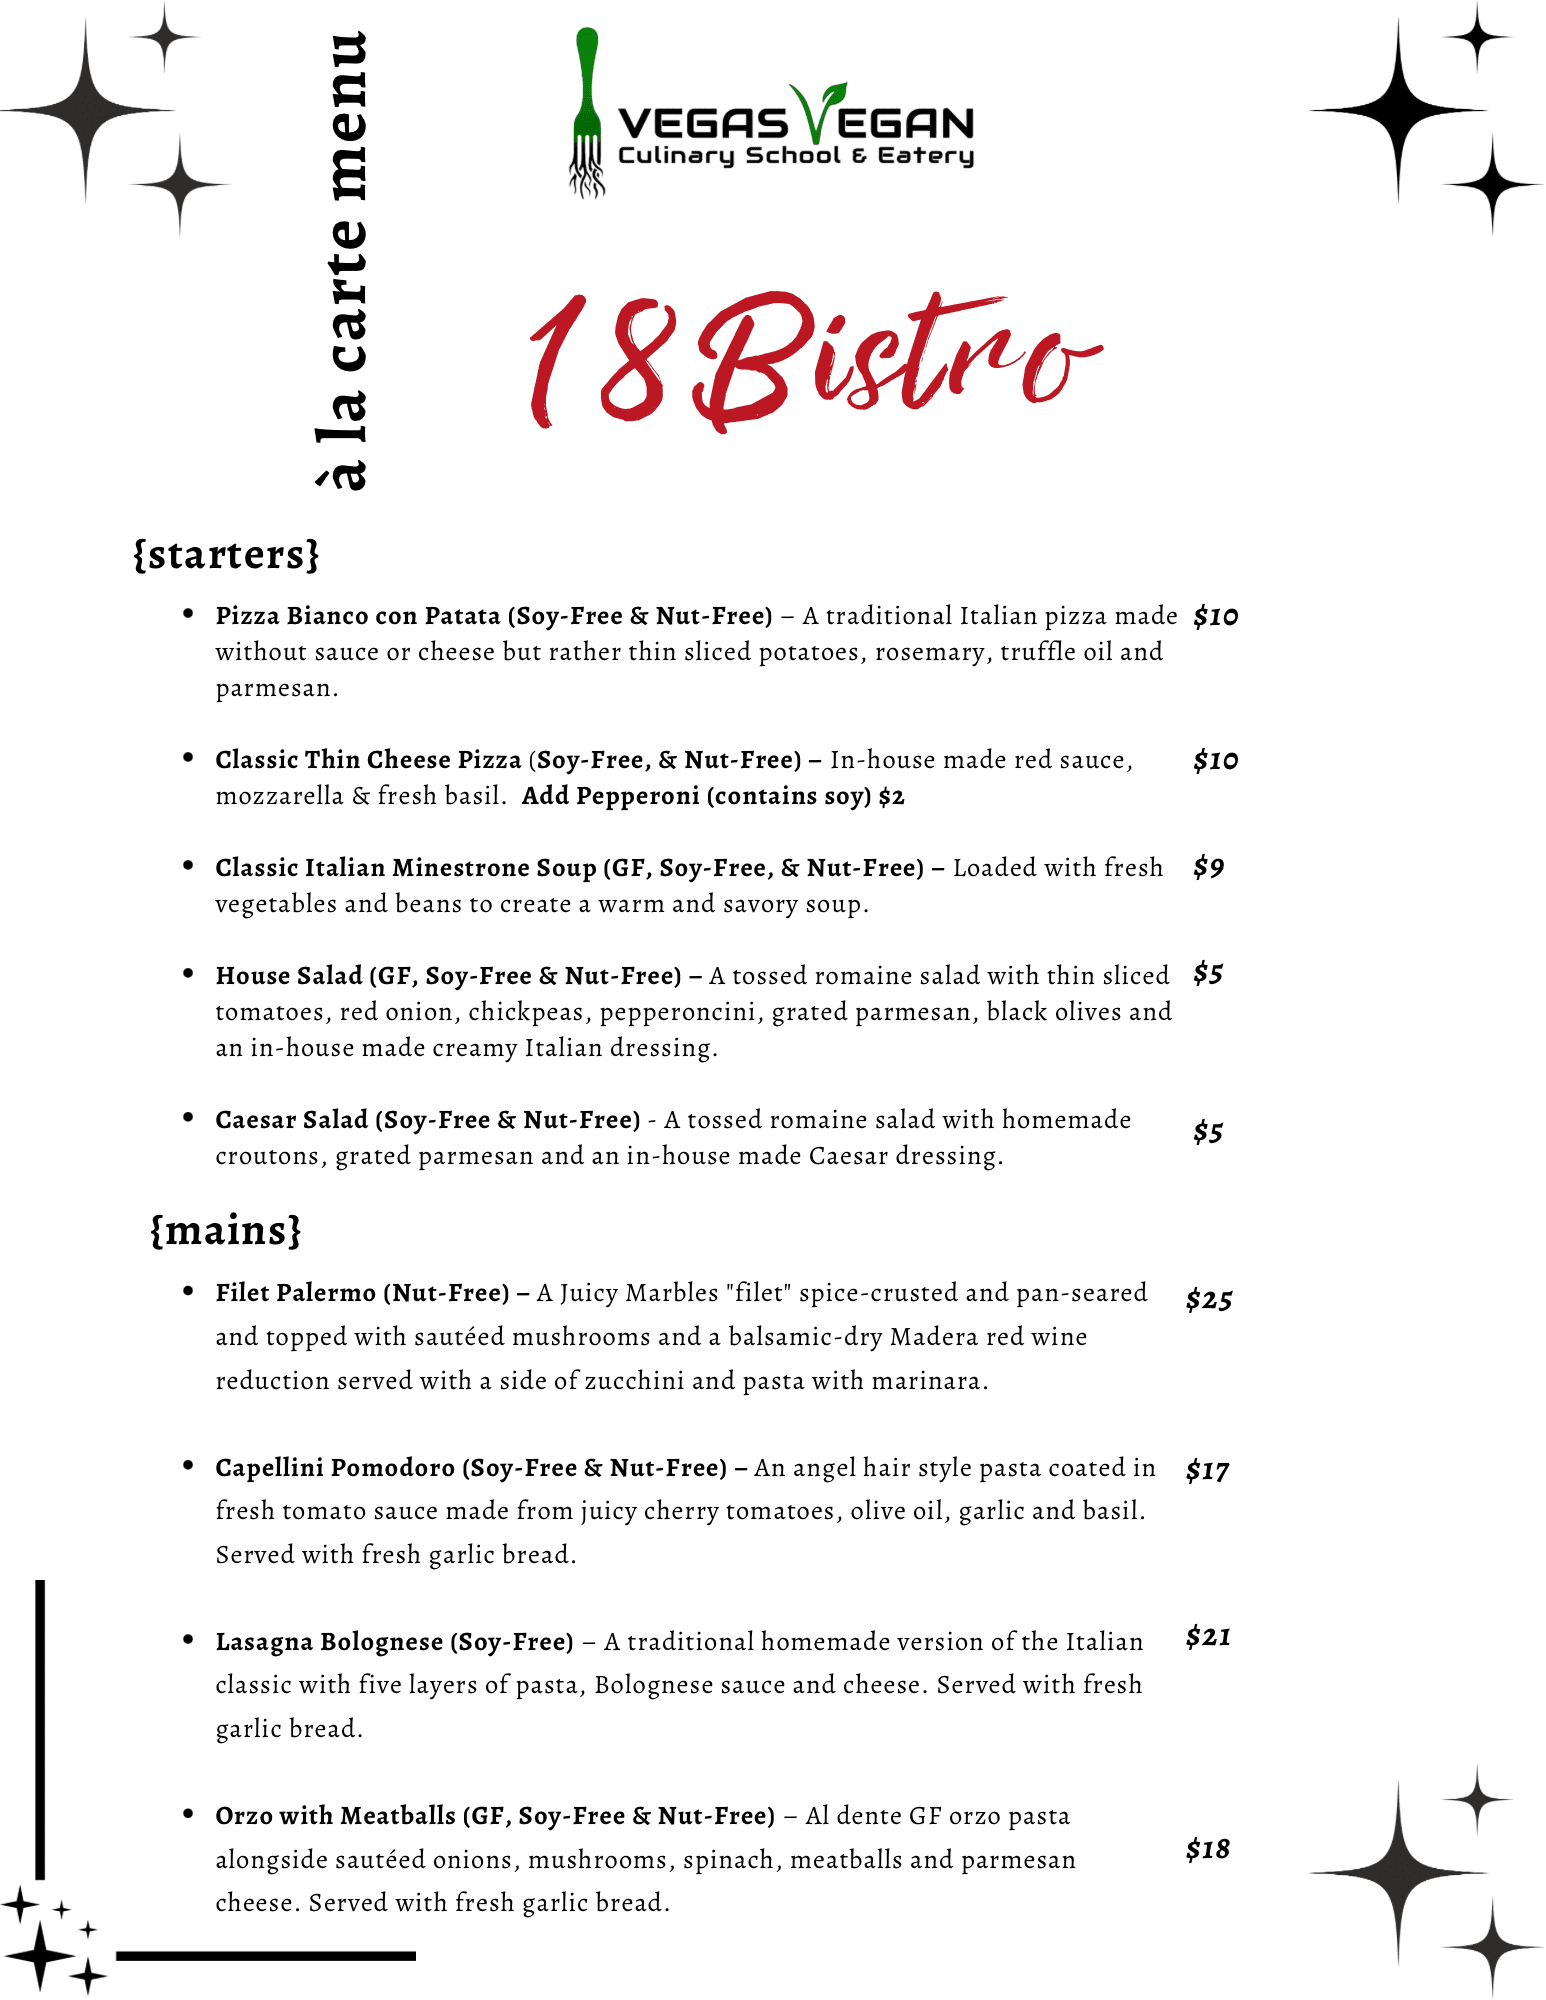 18 Bistro vegan dining a la carte menu 6-30